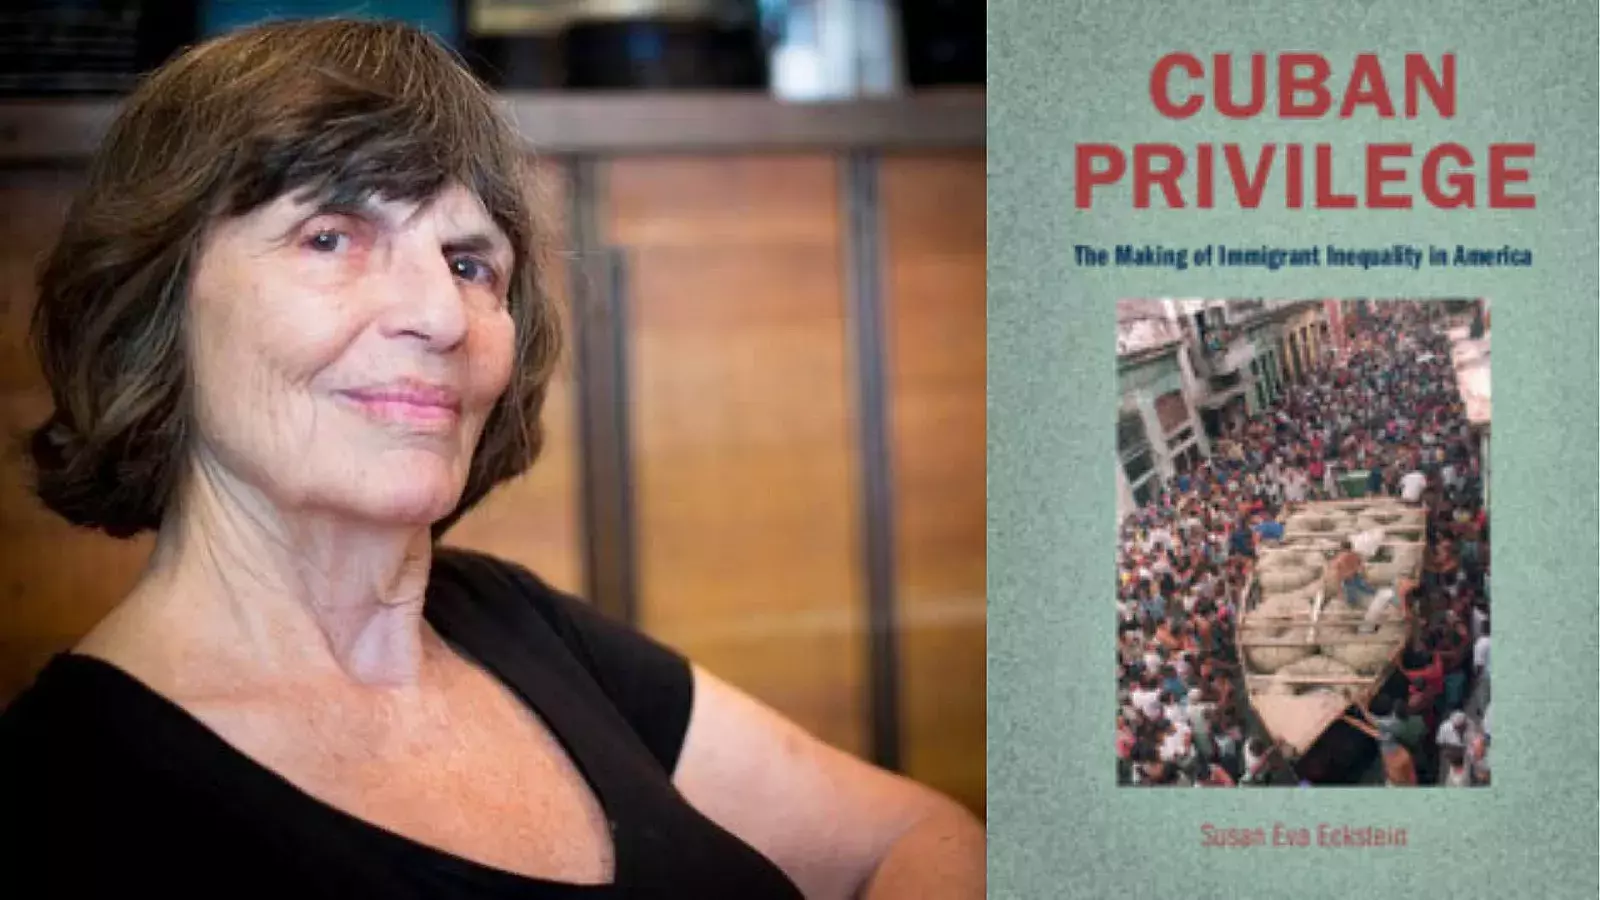 "Cuban Privilege: The Making of Immigrant Inequality in America" de la académica Susan Eckstein